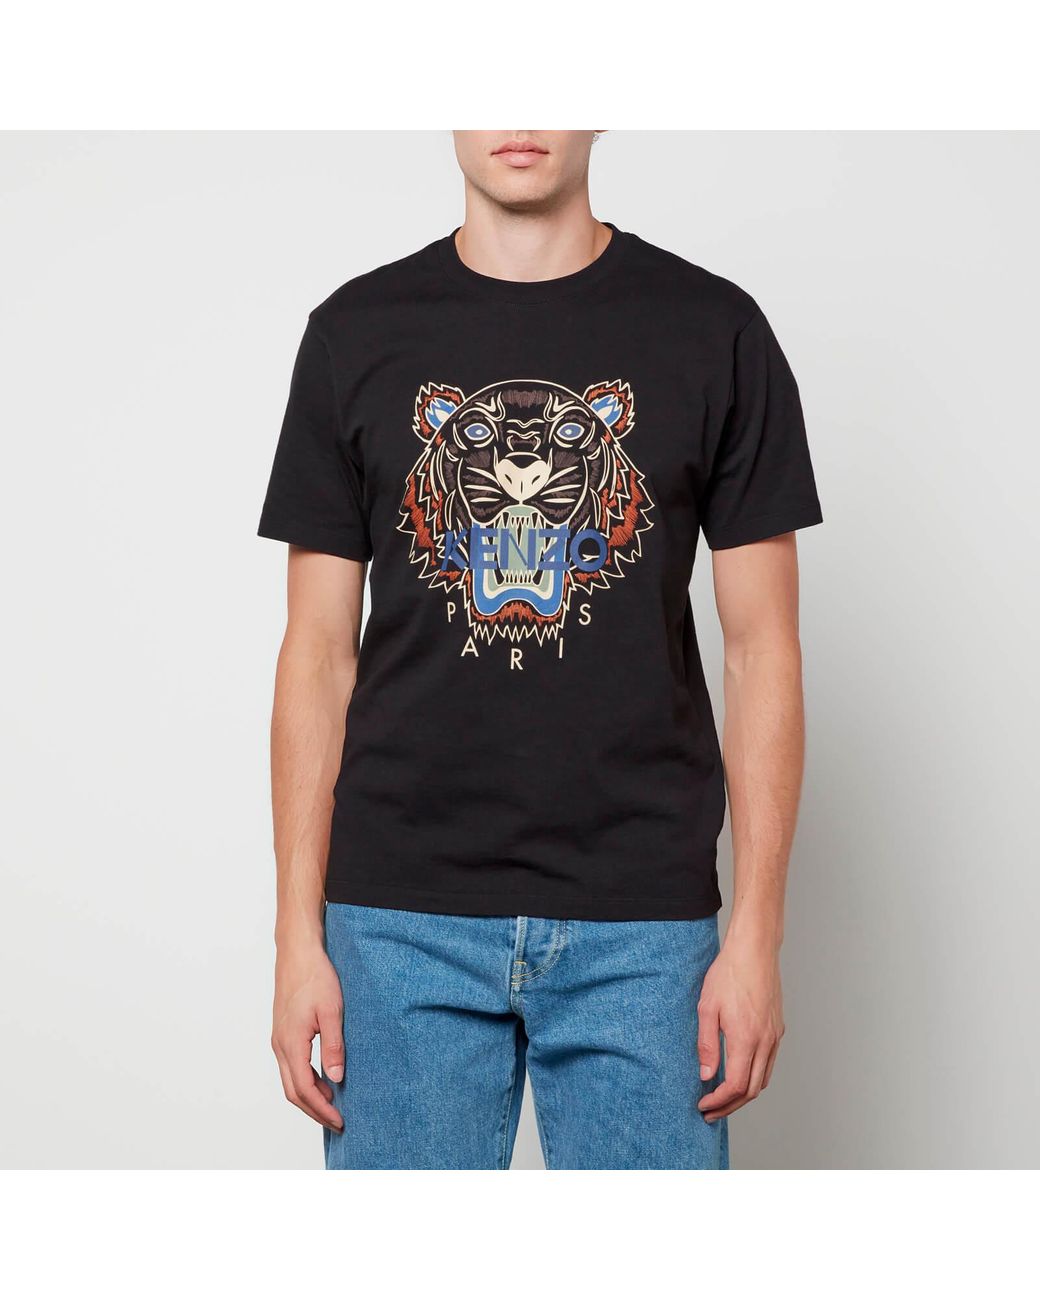 KENZO Tiger Emblem Cotton-jersey T-shirt in Black for Men | Lyst